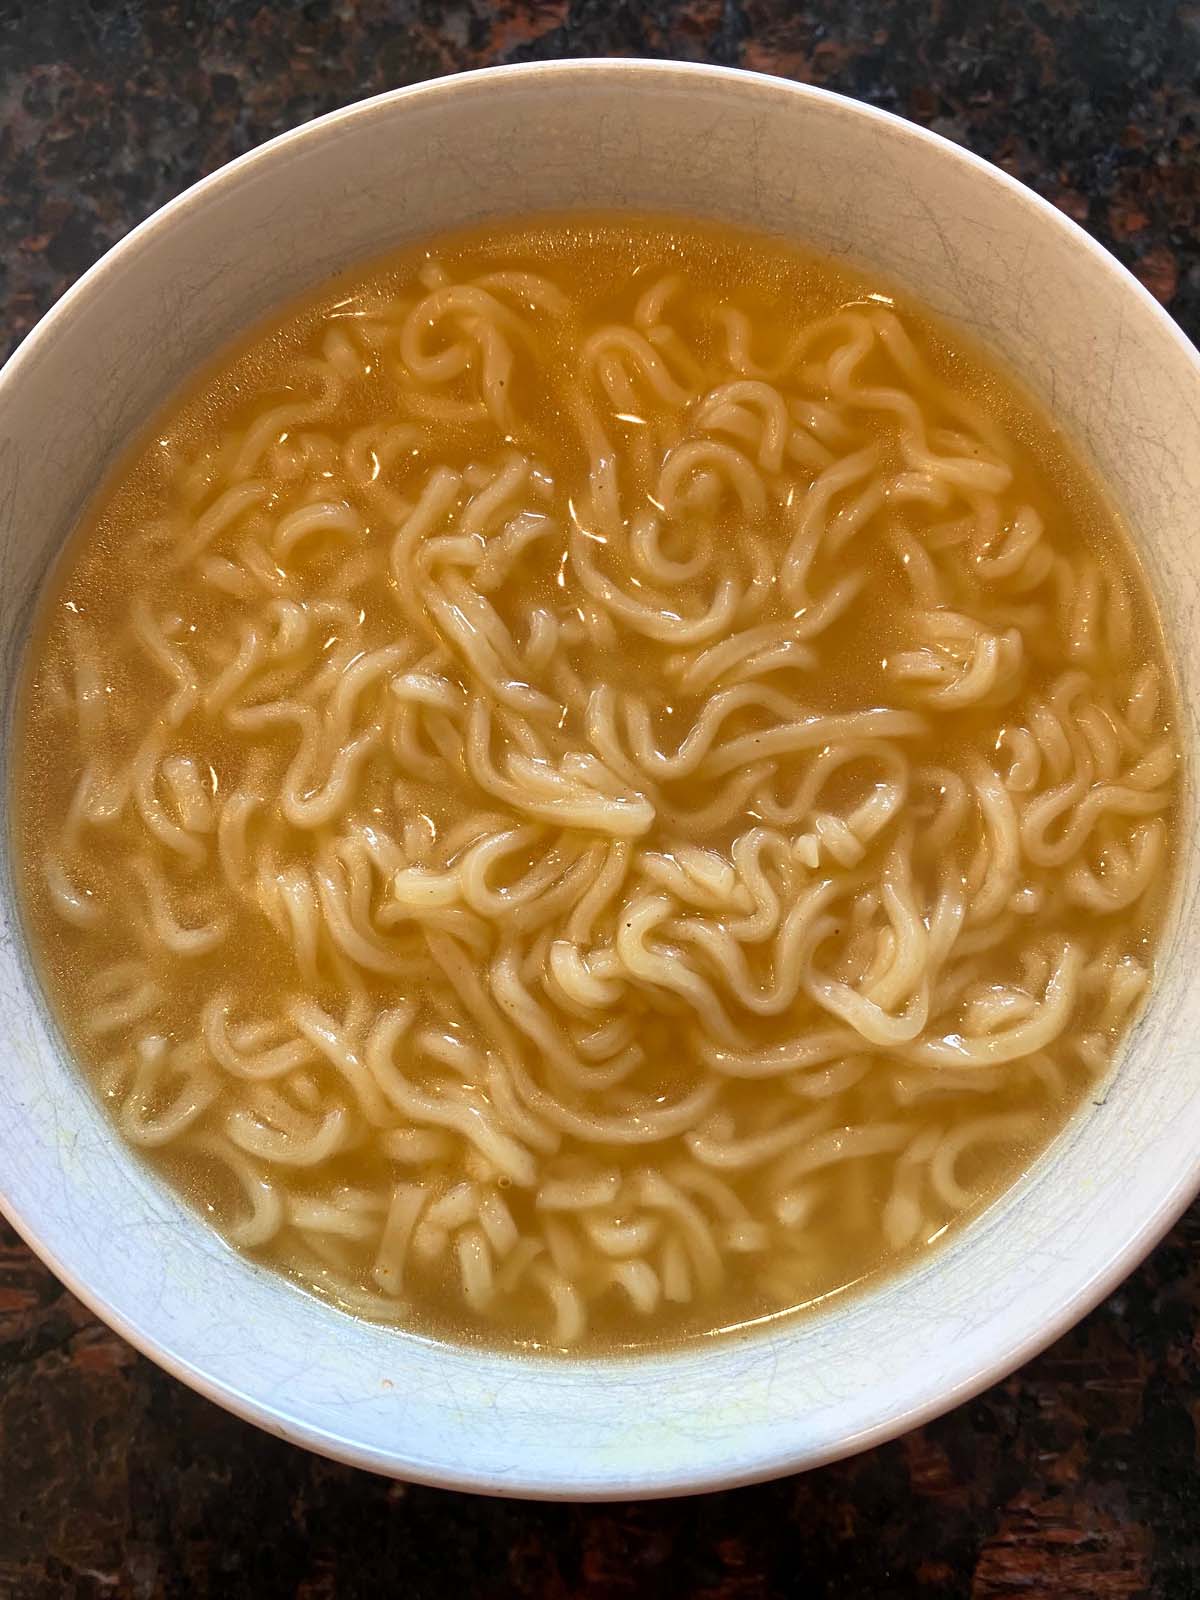 https://www.melaniecooks.com/wp-content/uploads/2021/10/Instant-pot-ramen-noodles-7.jpg